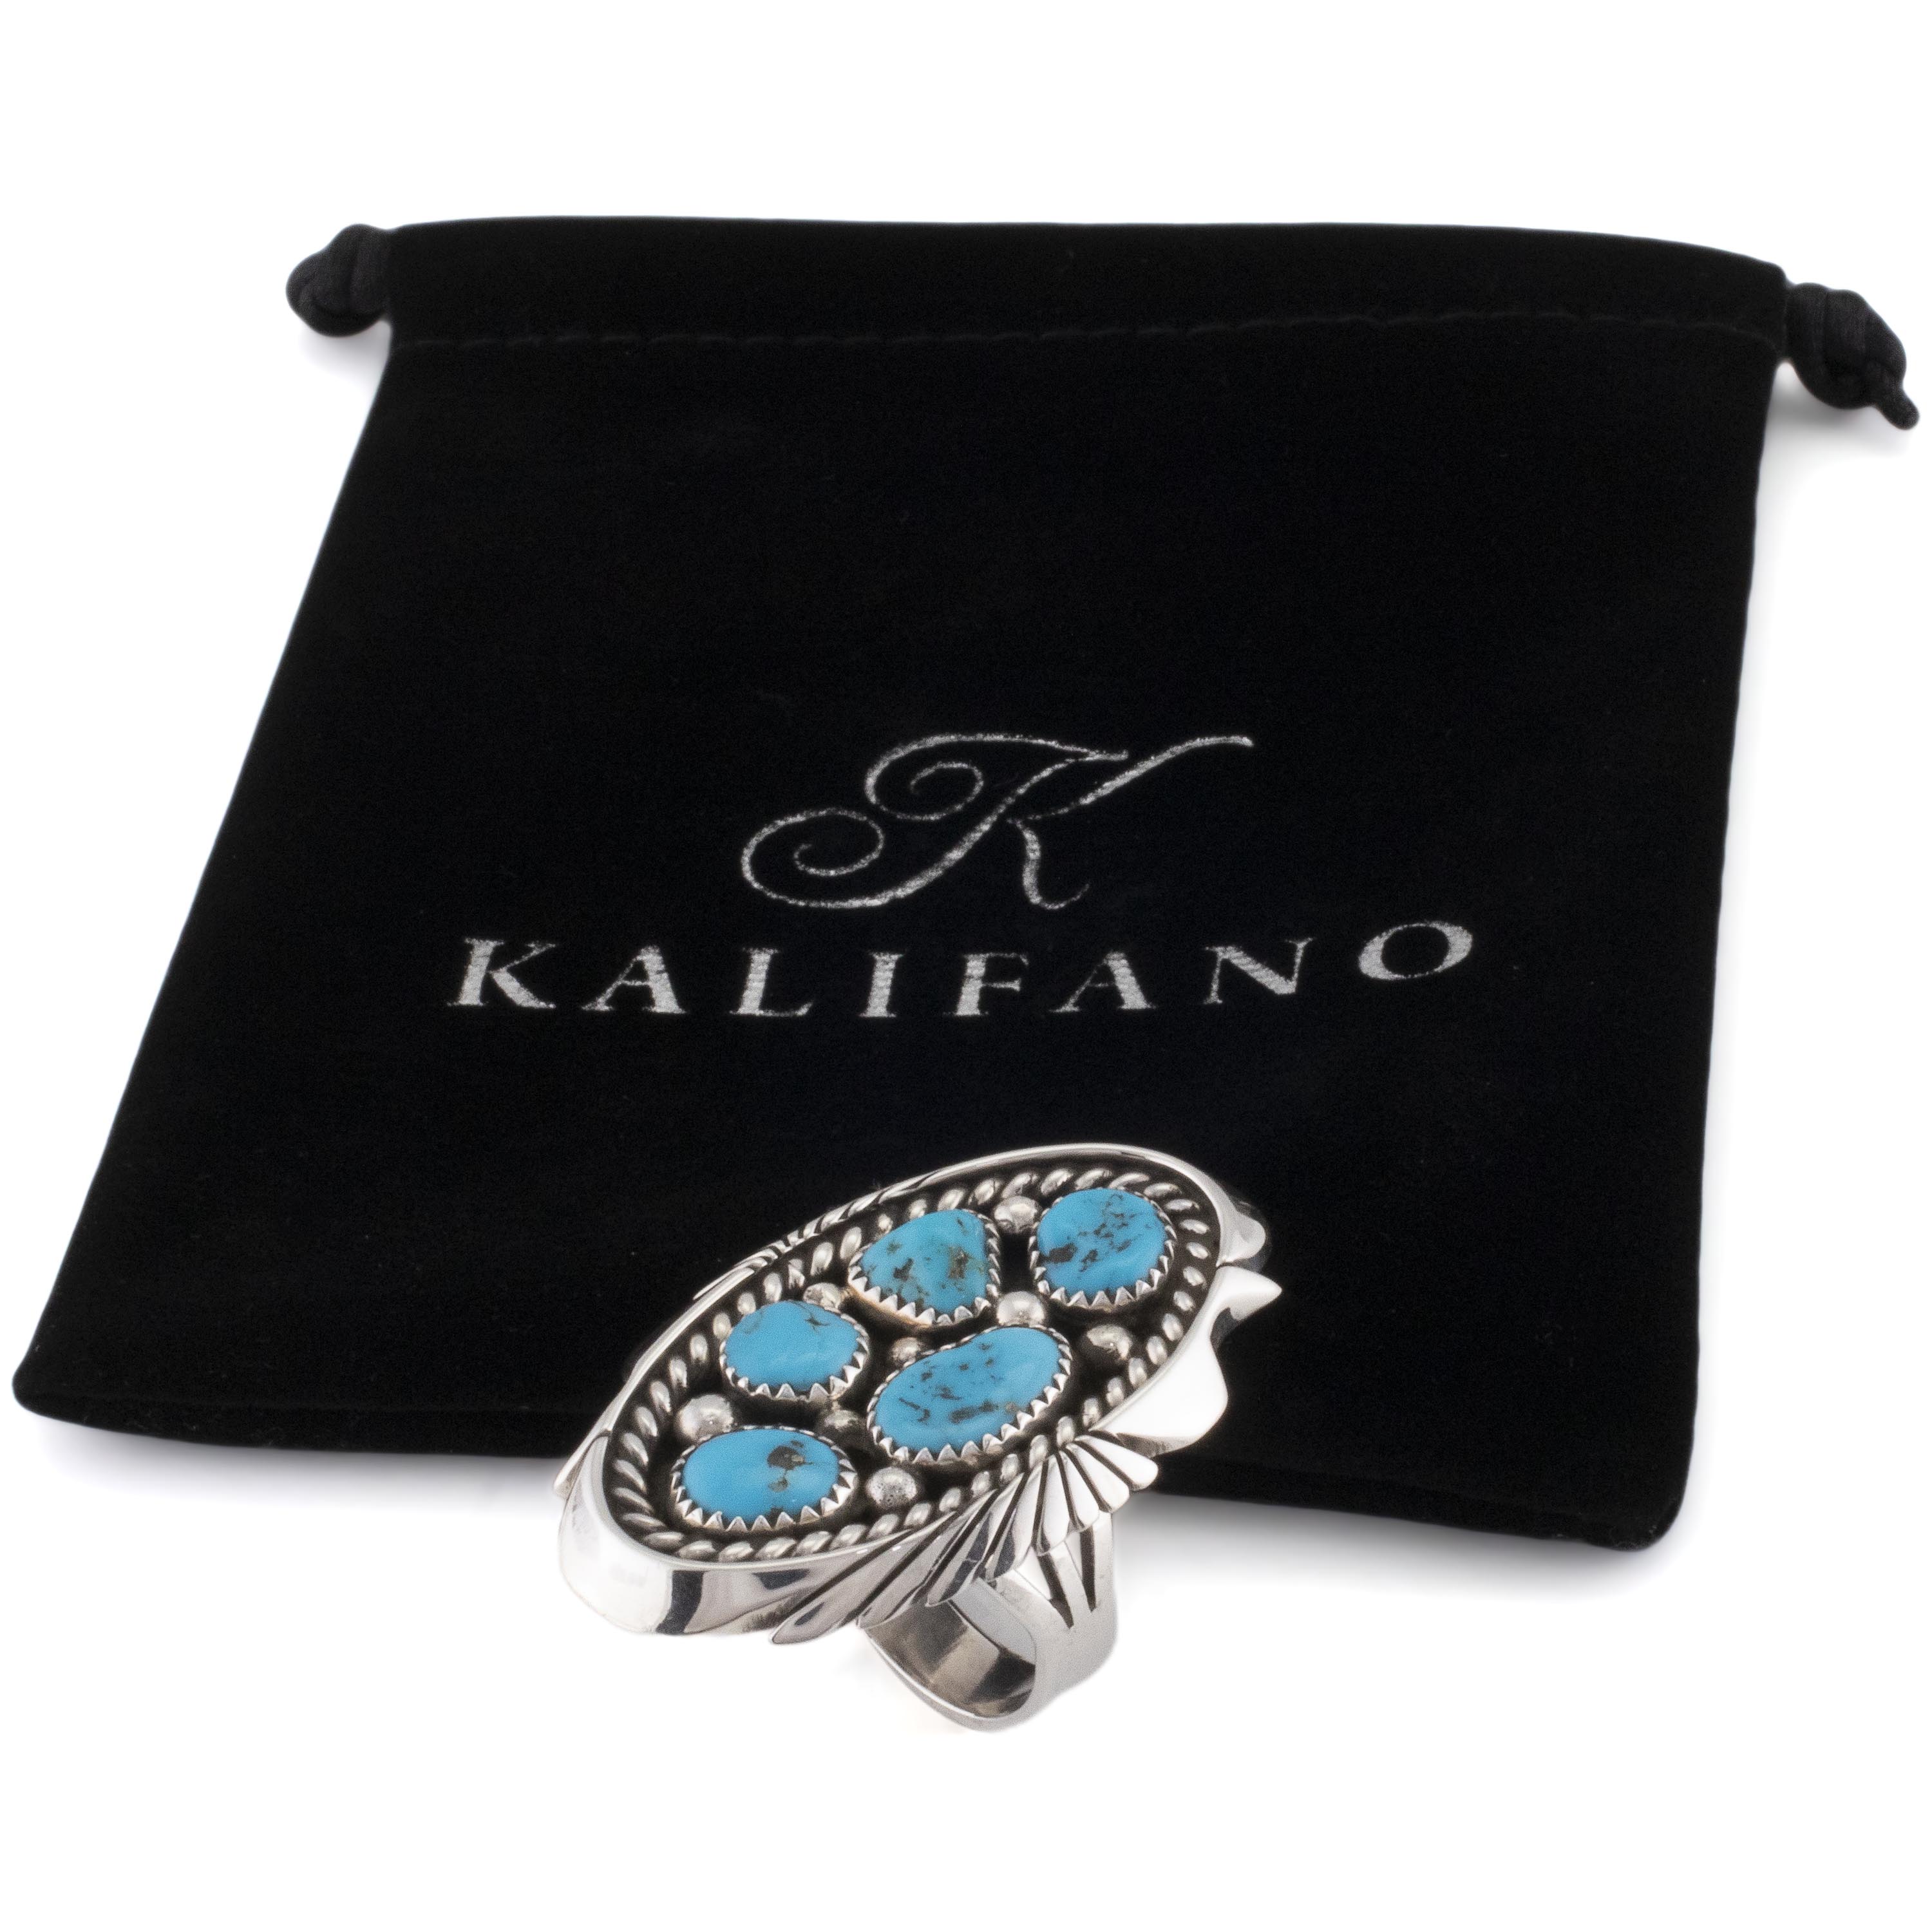 Kalifano Native American Jewelry 11 Melvin Jones Navajo Kingman Turquoise USA Native American Made 925 Sterling Silver Ring NAR1100.003.11